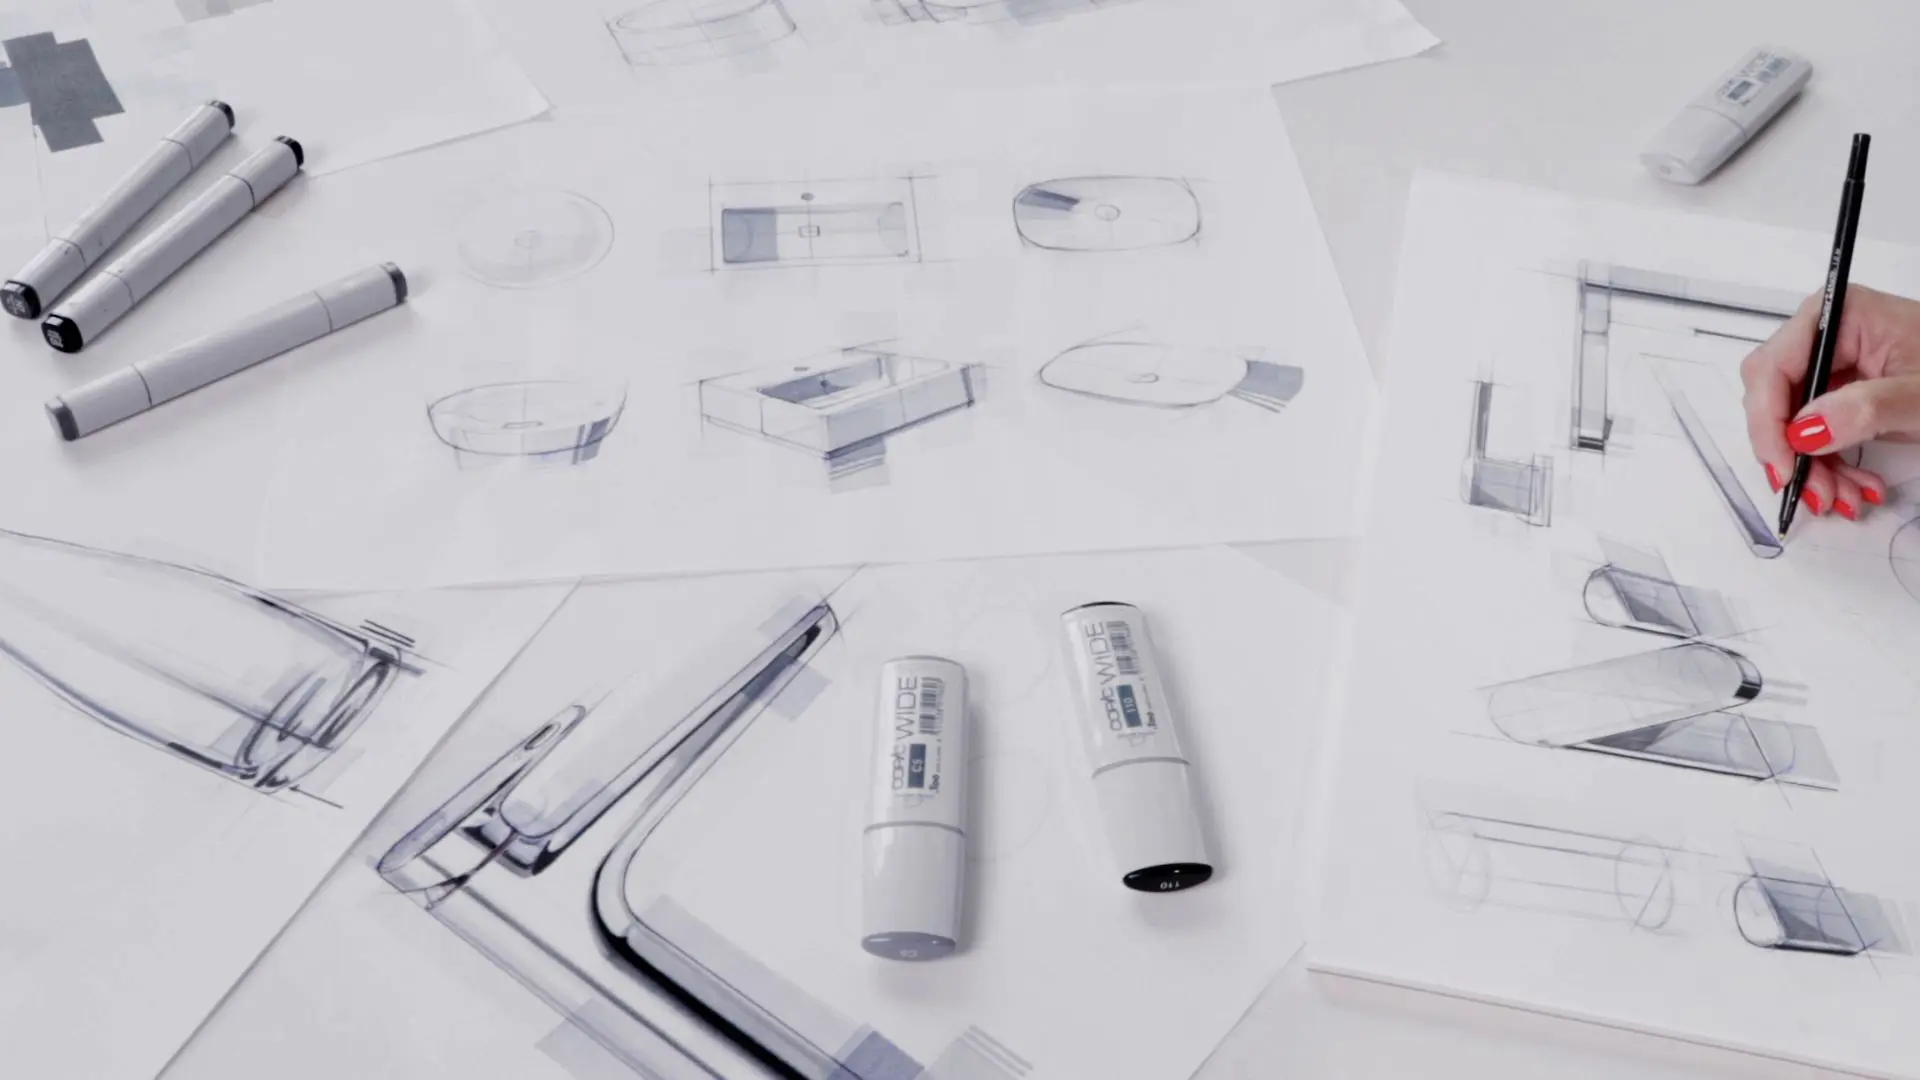 LIXIL Global Design - design sketches